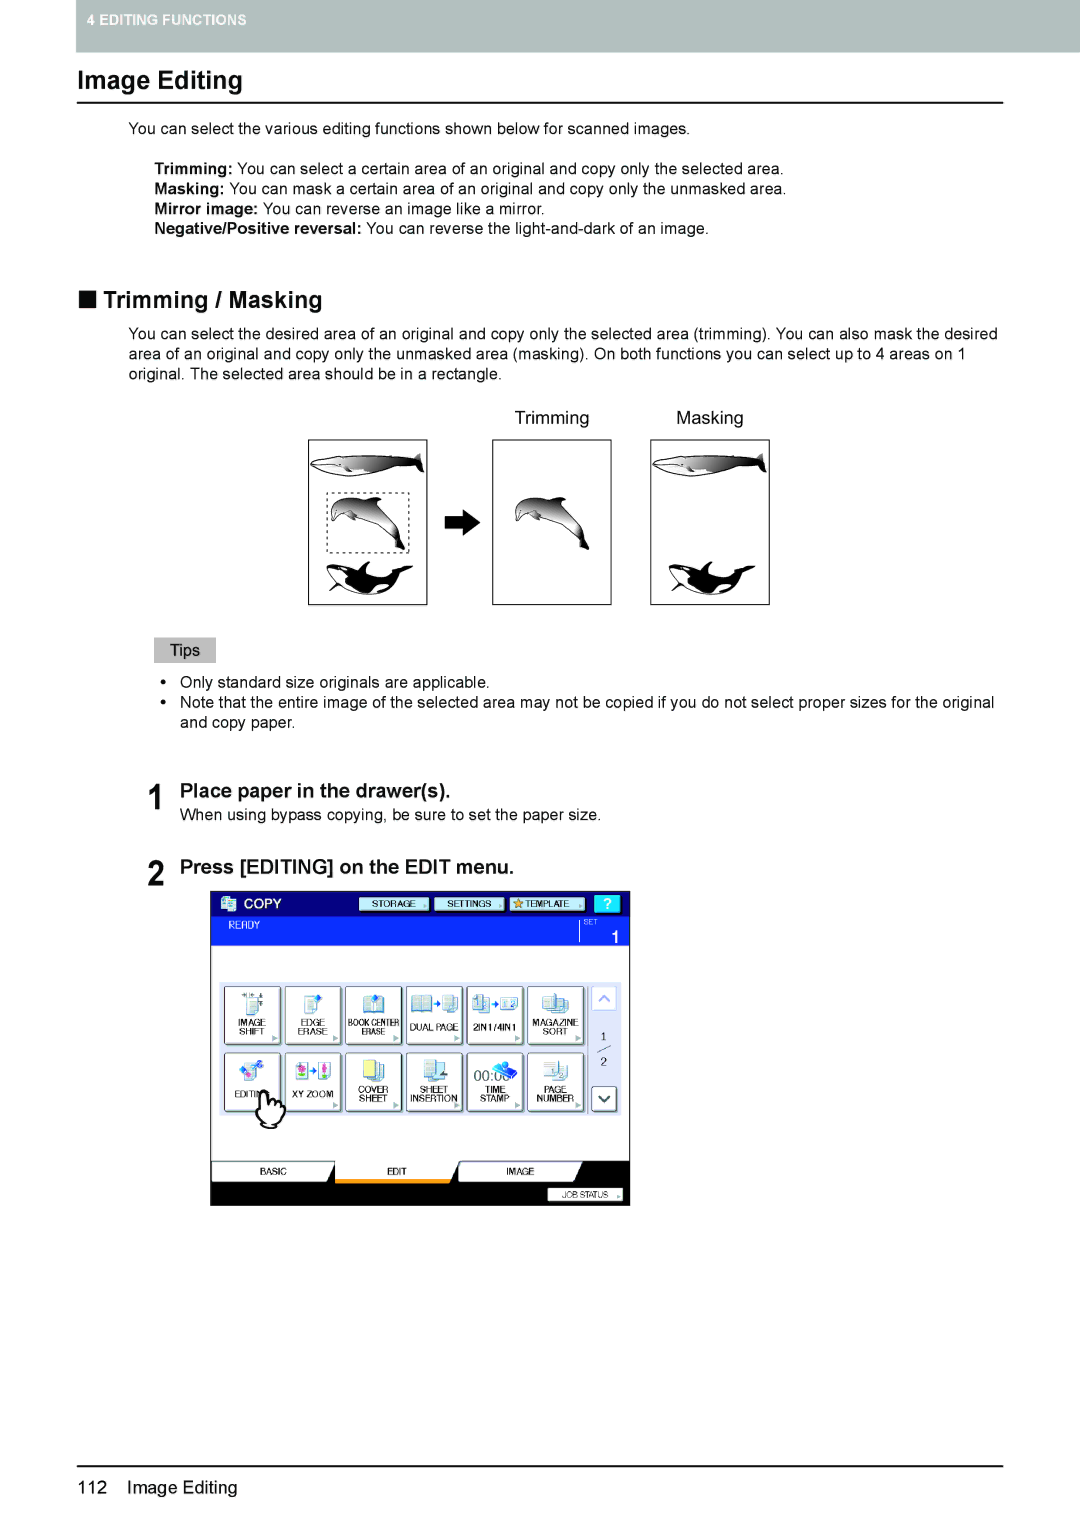 Toshiba 6520c, e-STUDIO5520C manual Image Editing, „ Trimming / Masking, Press Editing on the Edit menu 